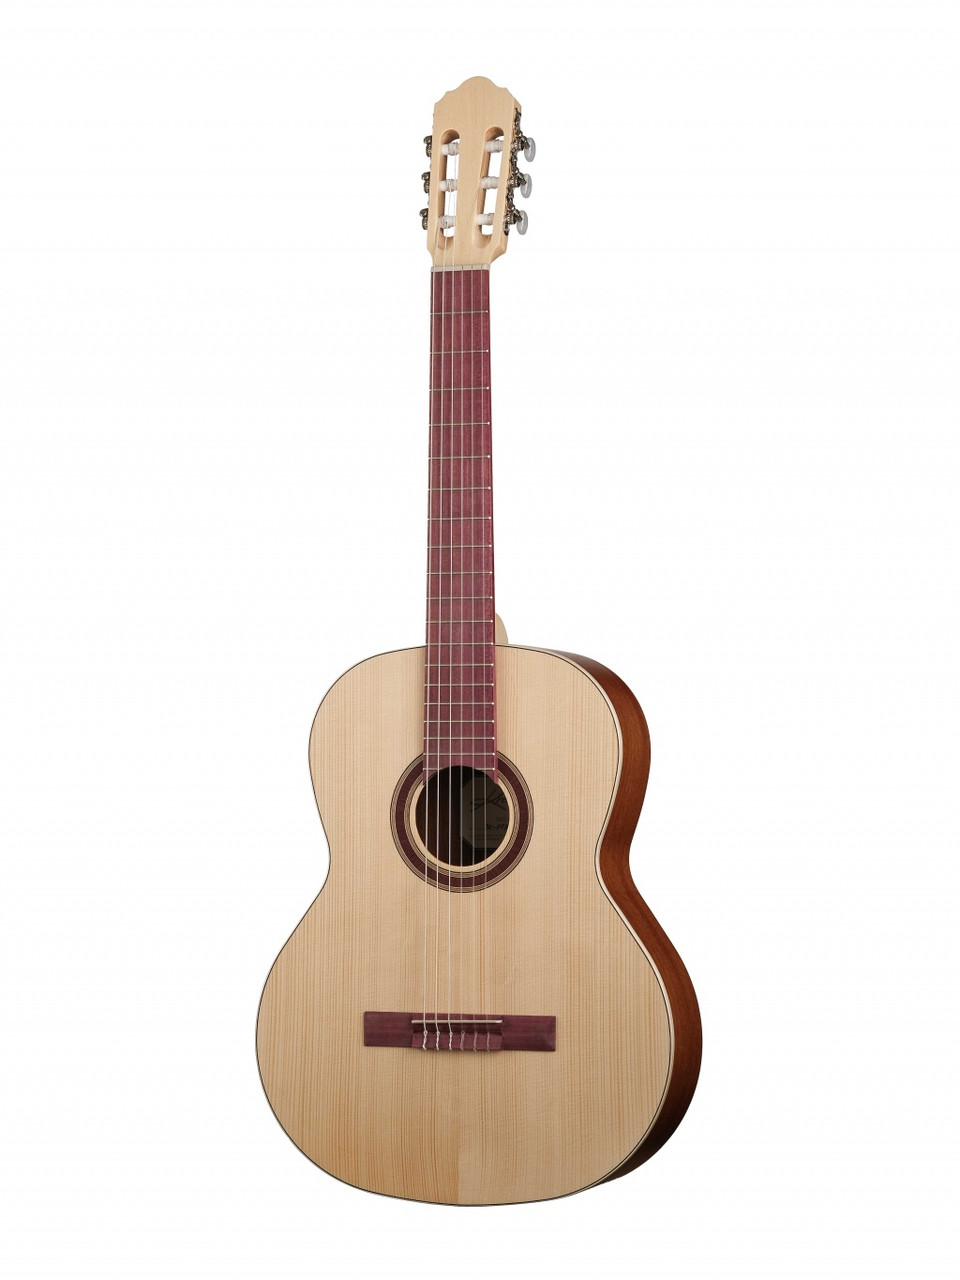 Kremona S65S-GG Sofia Soloist Series Green Globe Классическая гитара, ель, размер 4/4